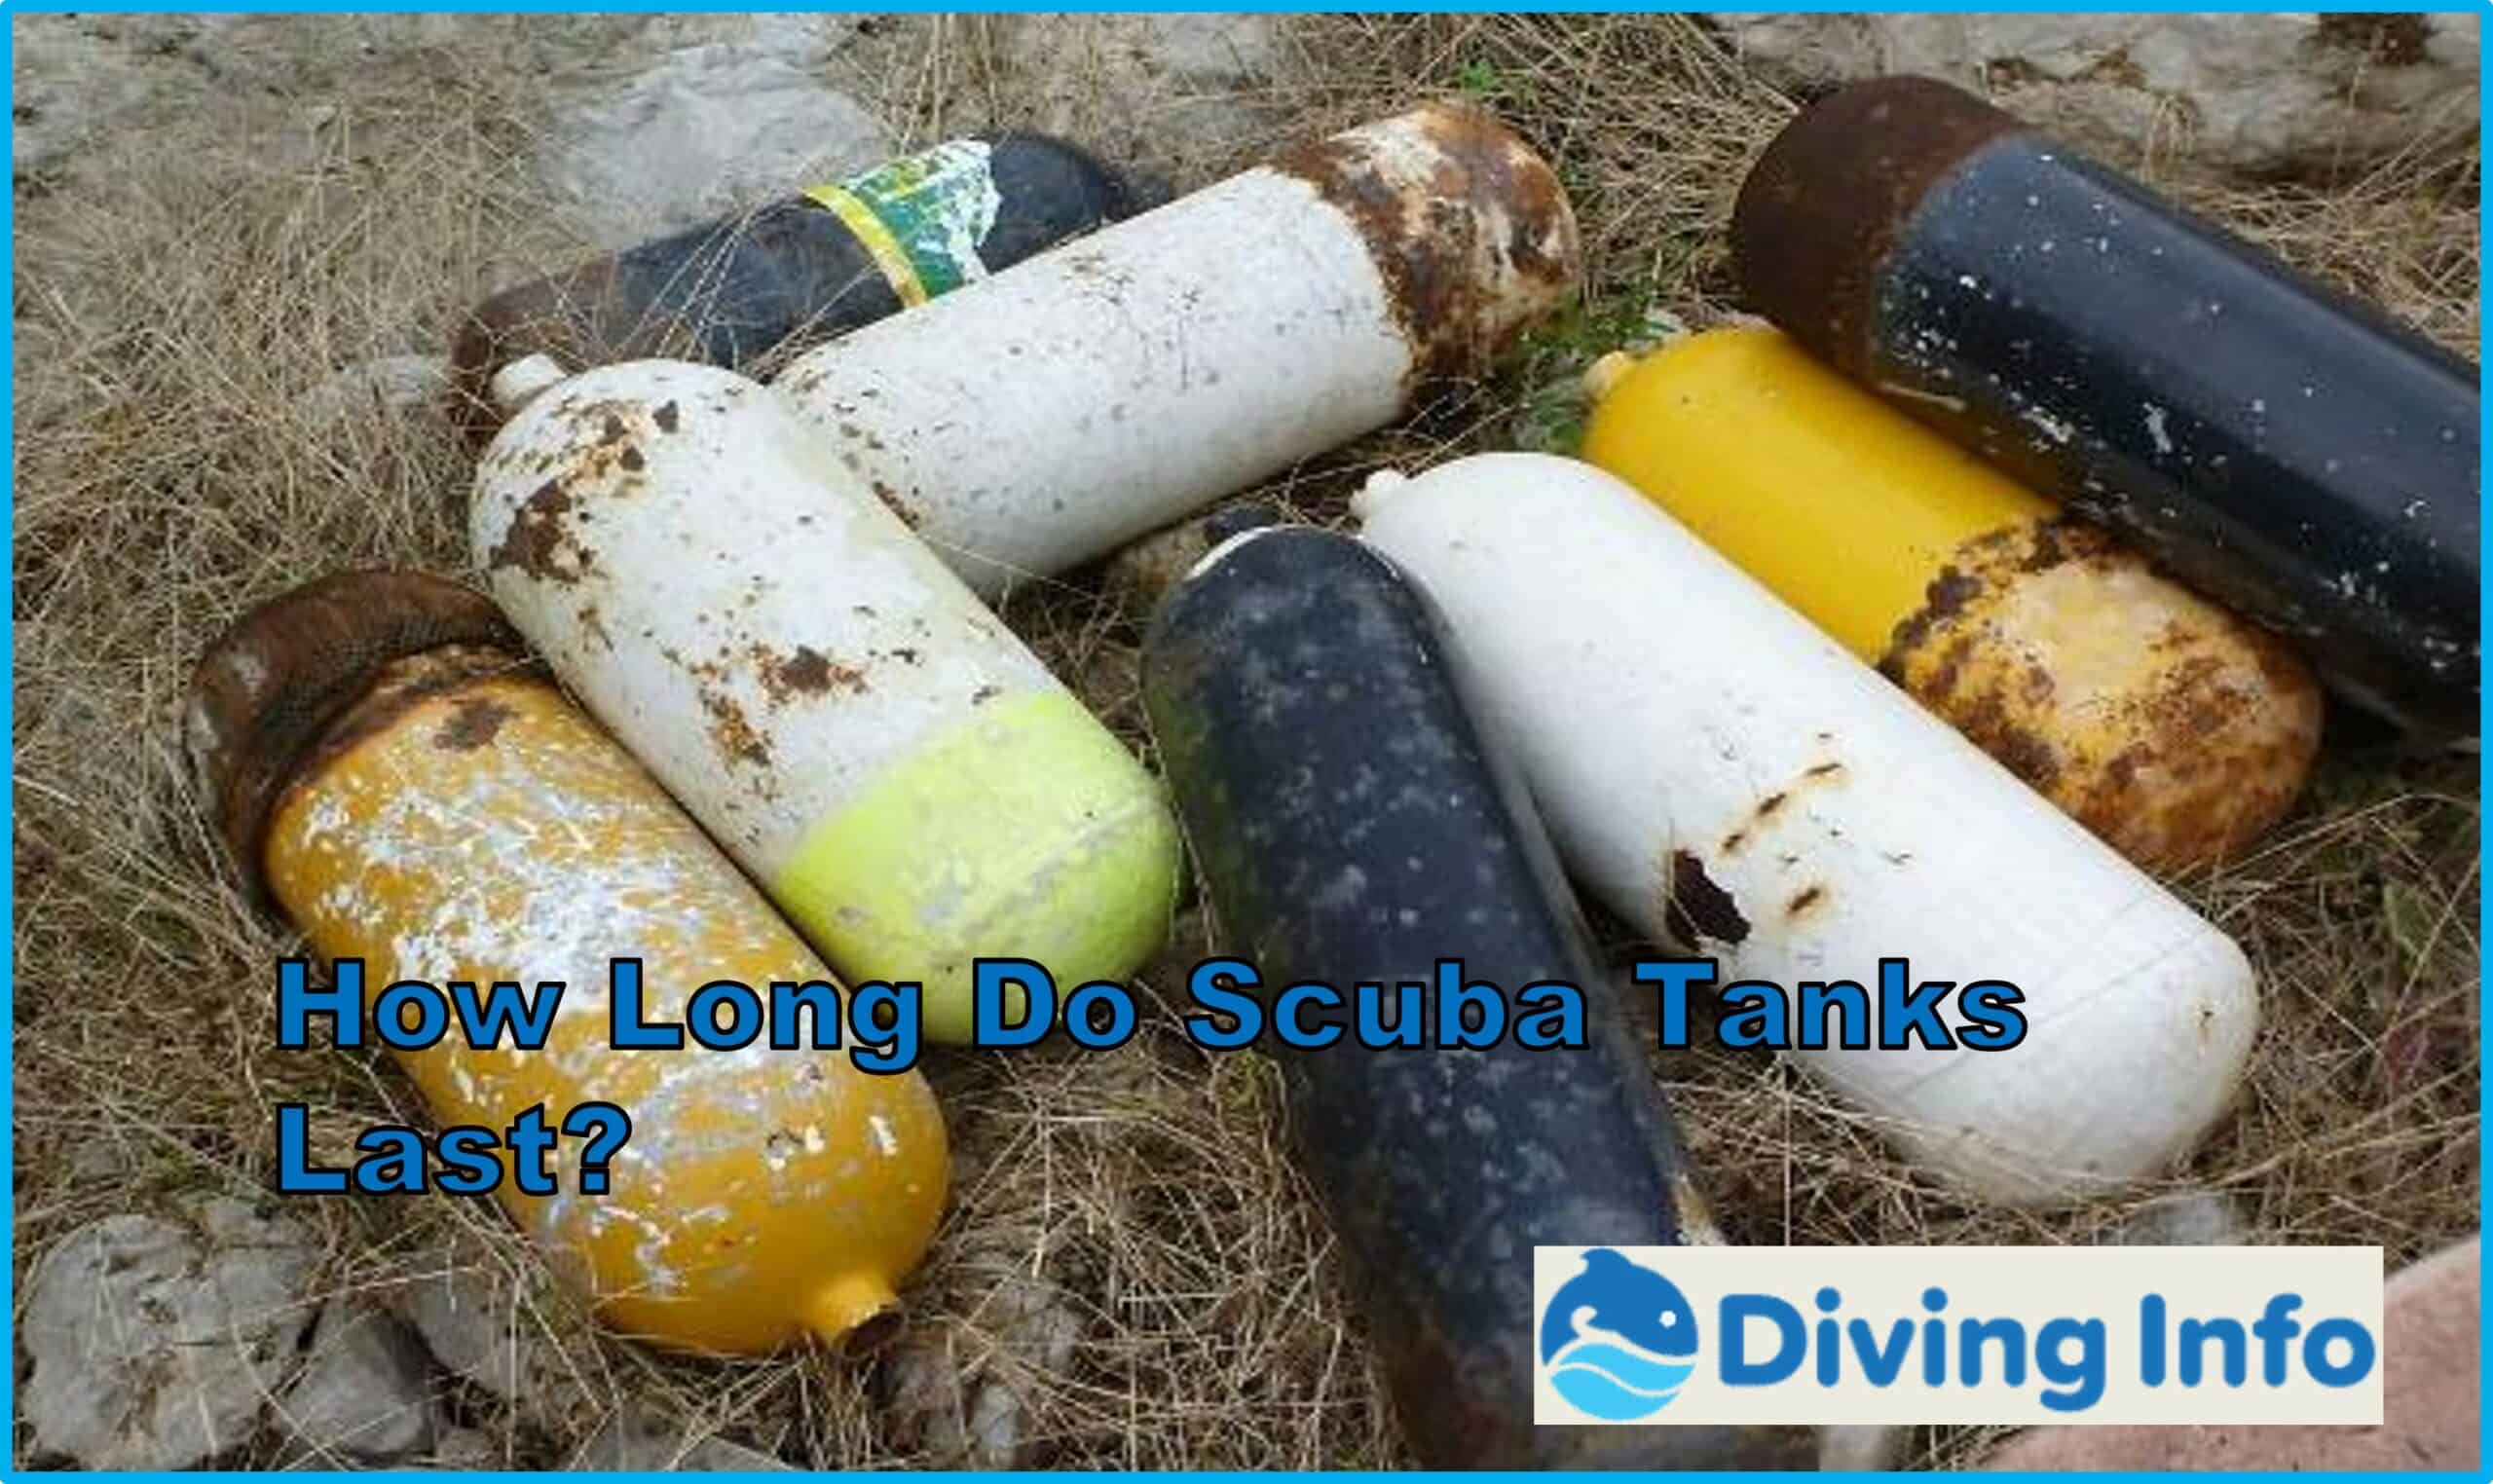 How Long Do Scuba Tanks Last?